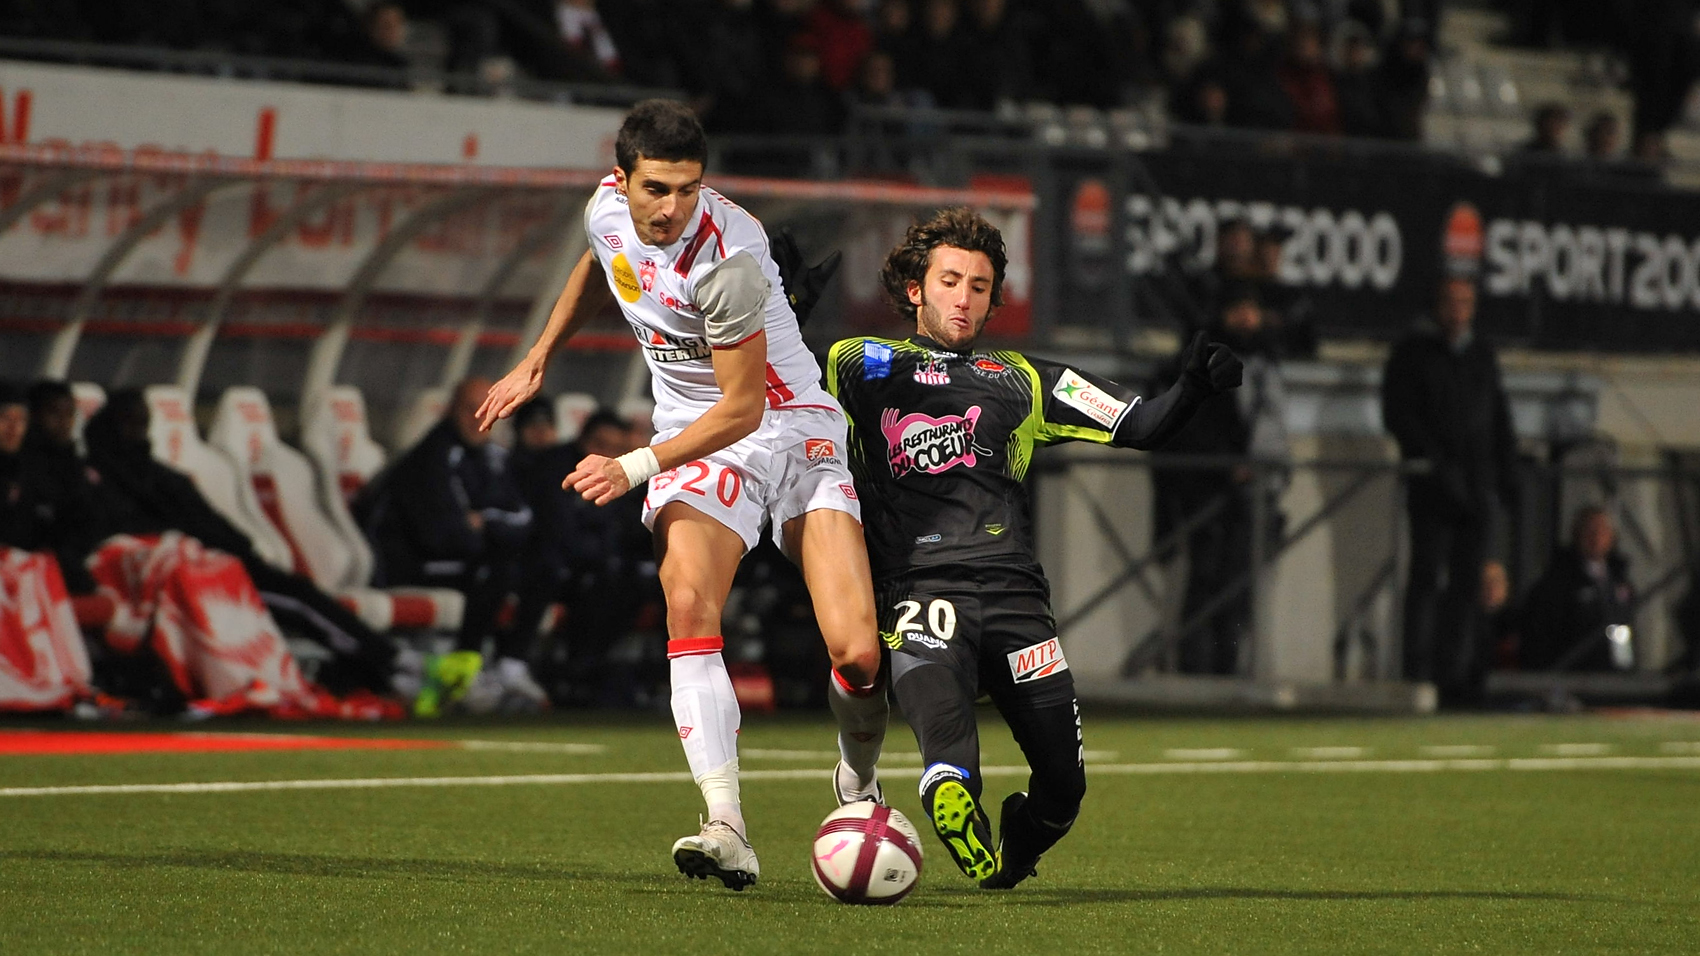 Football – Ligue 1 – Saison 2011/2012 – Nancy vs Ajaccio